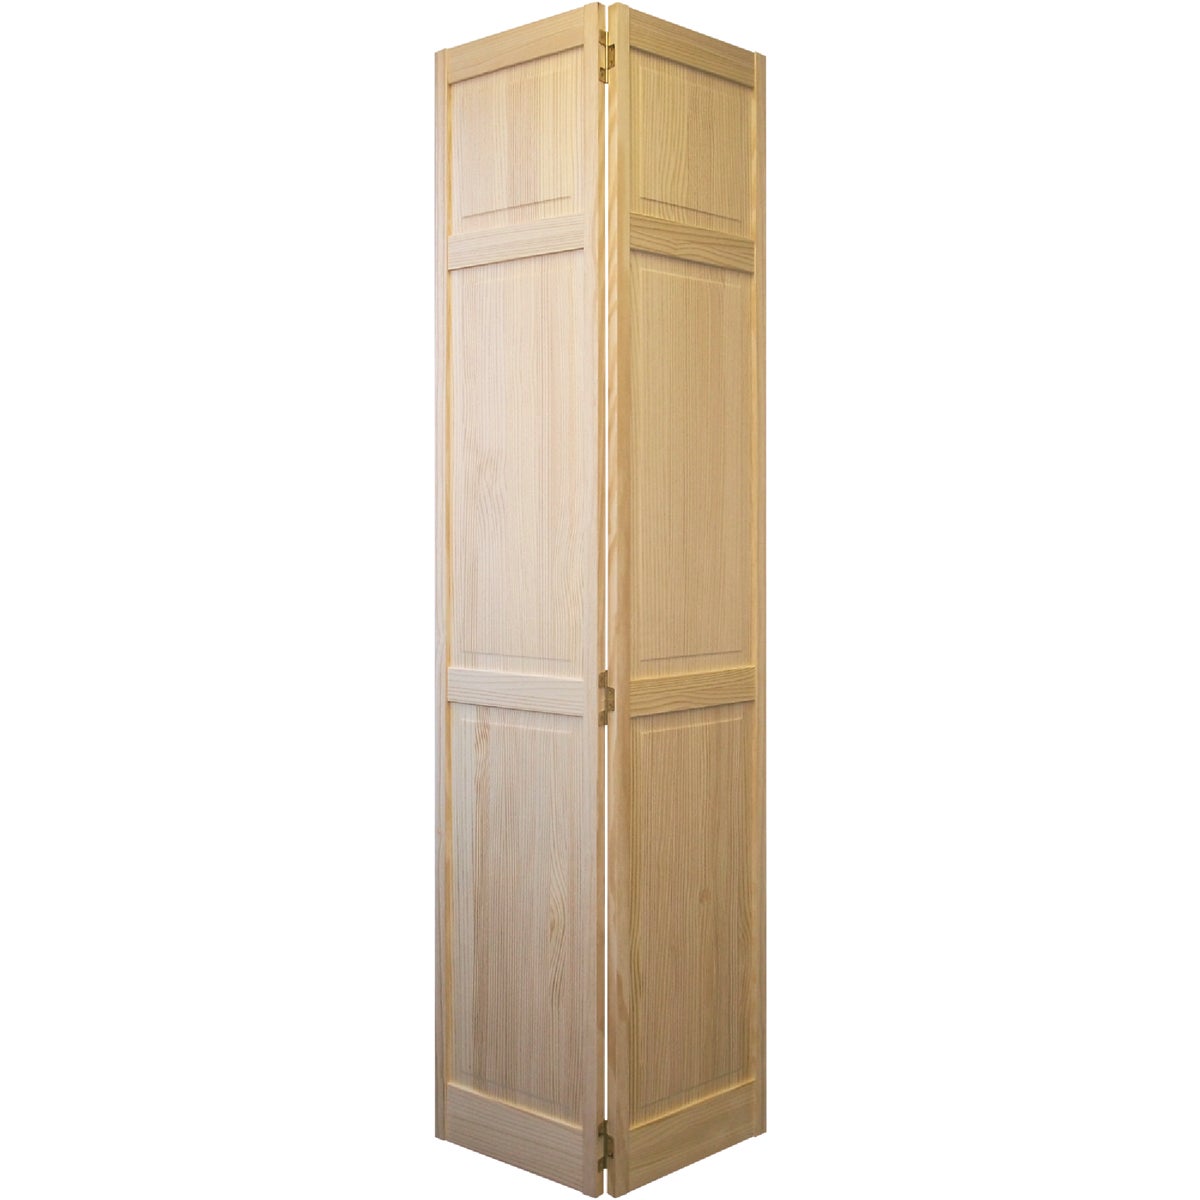 Item 173339, 1-inch thick traditional 6-panel bifold doors in beautiful vertical grain 